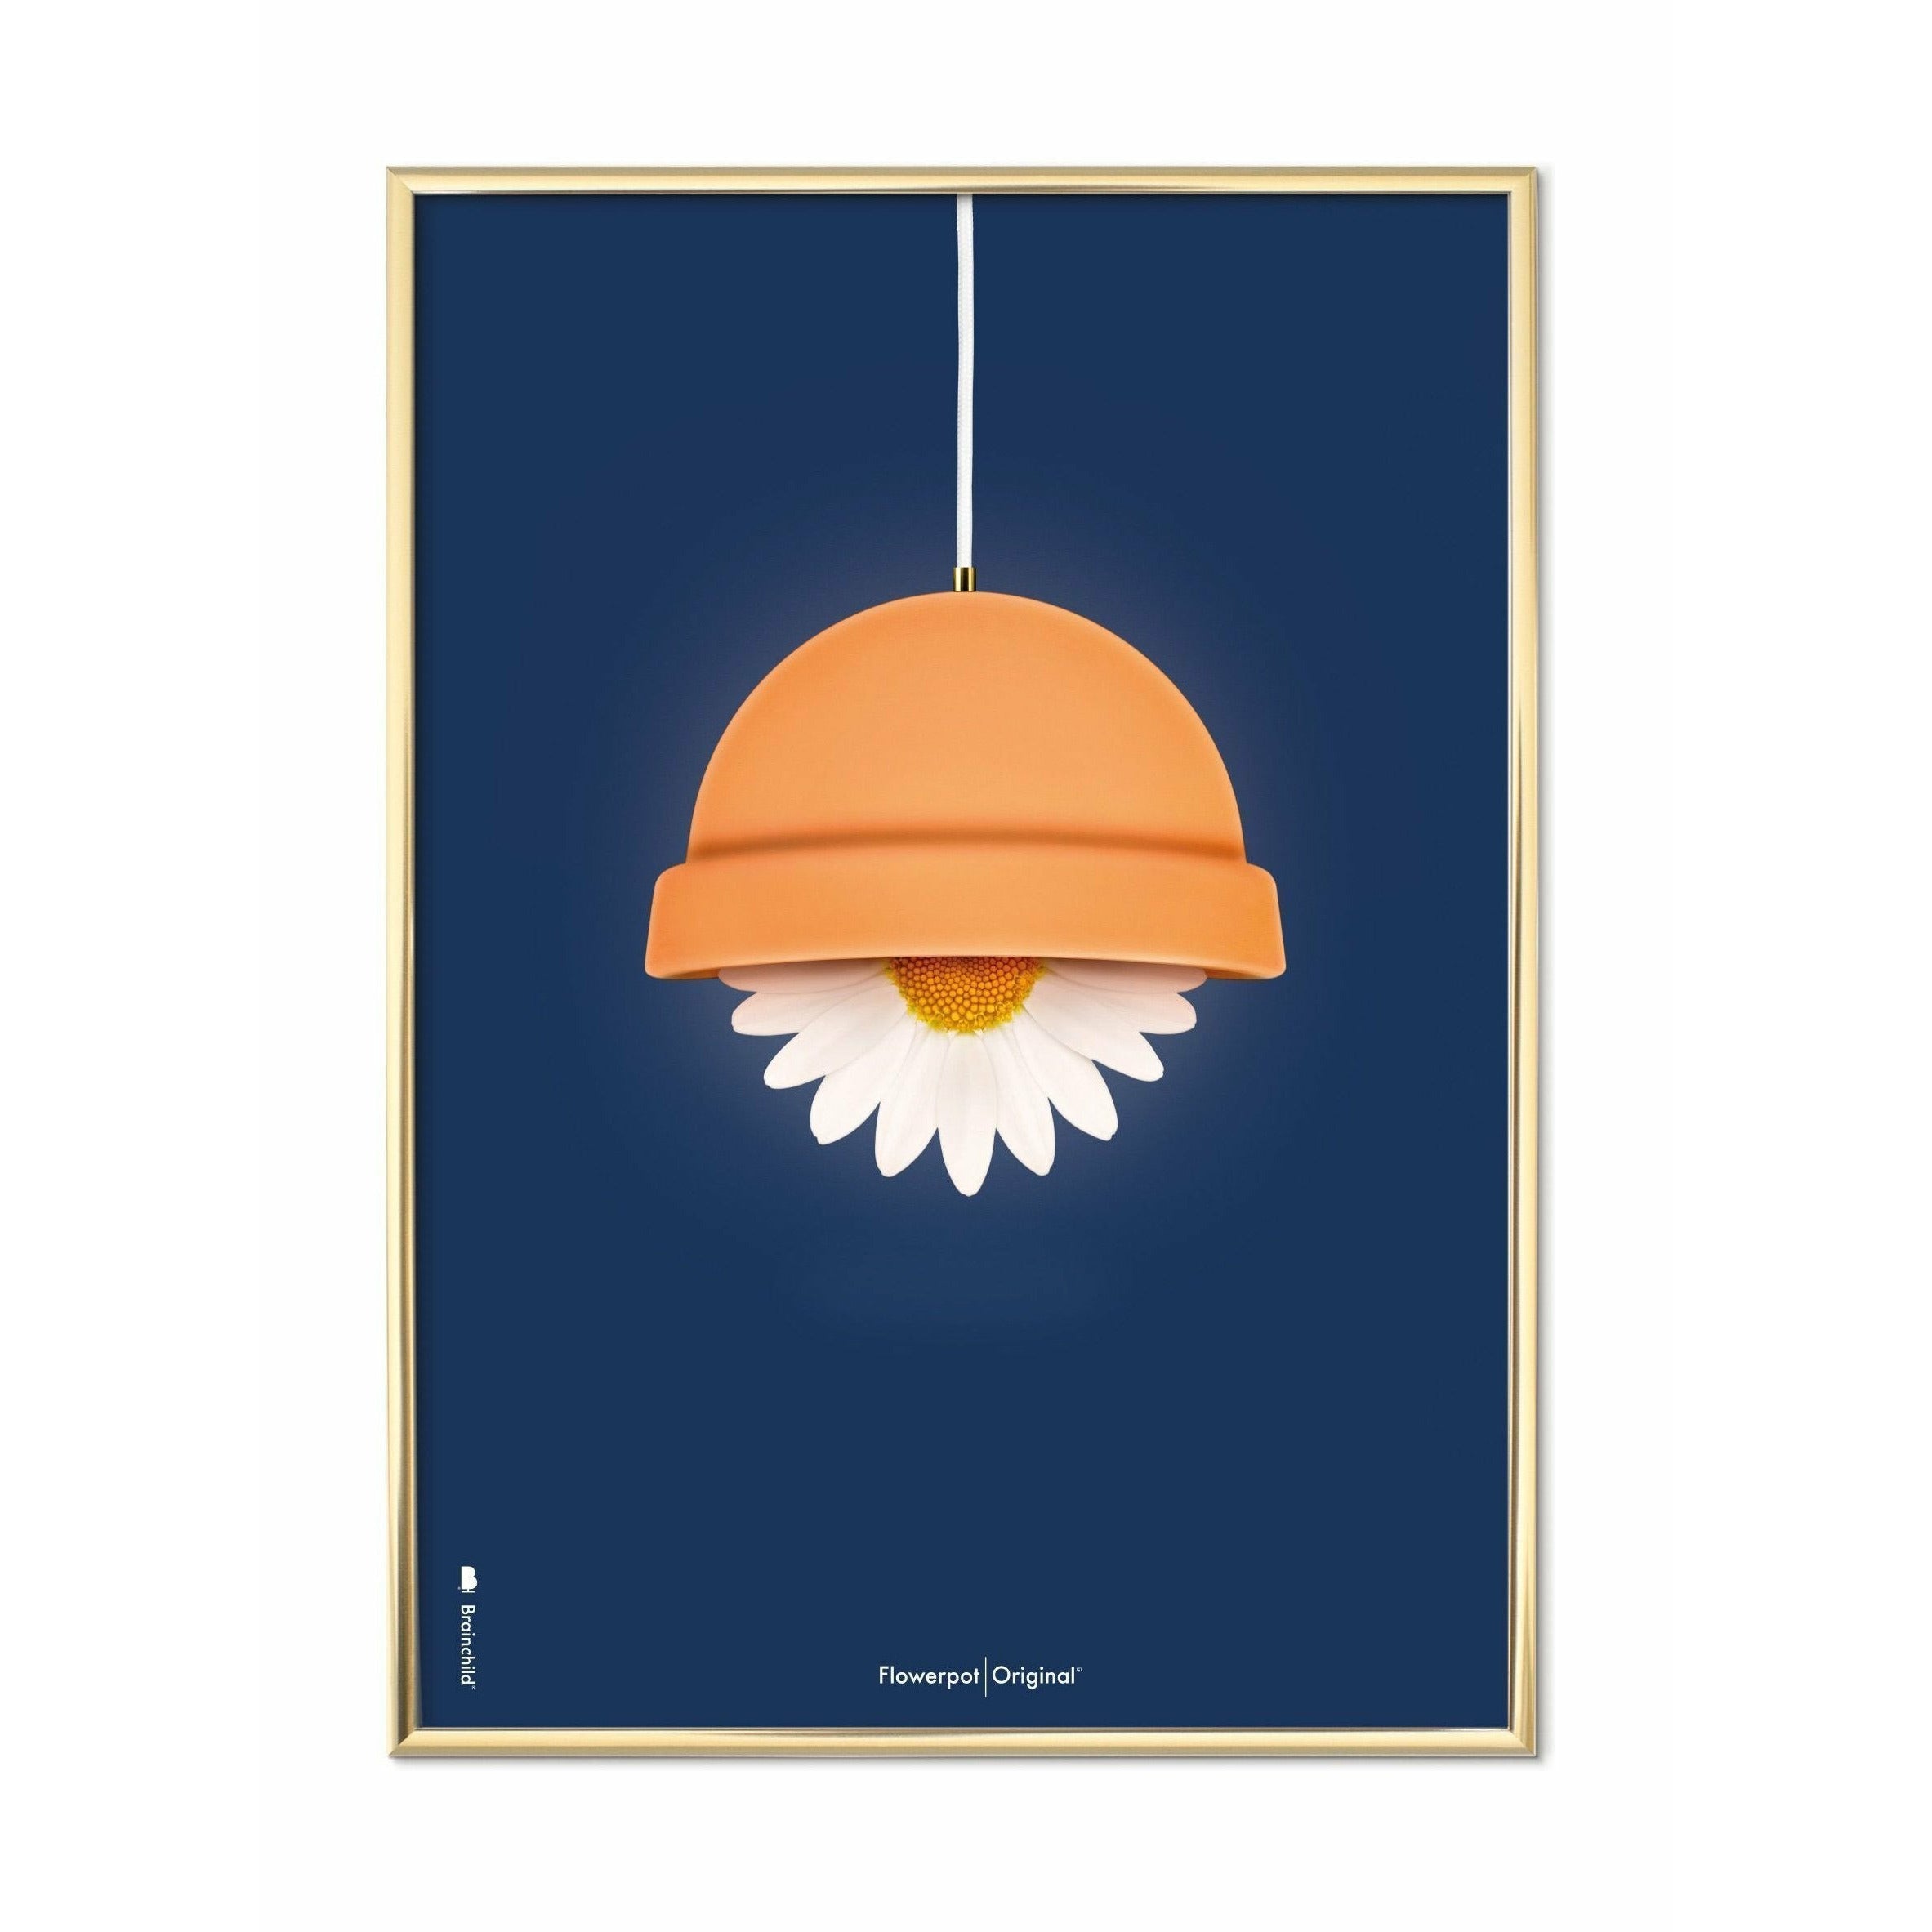 Brainchild Flowerpot Classic Poster, Brass Colored Frame 30x40 Cm, Dark Blue Background